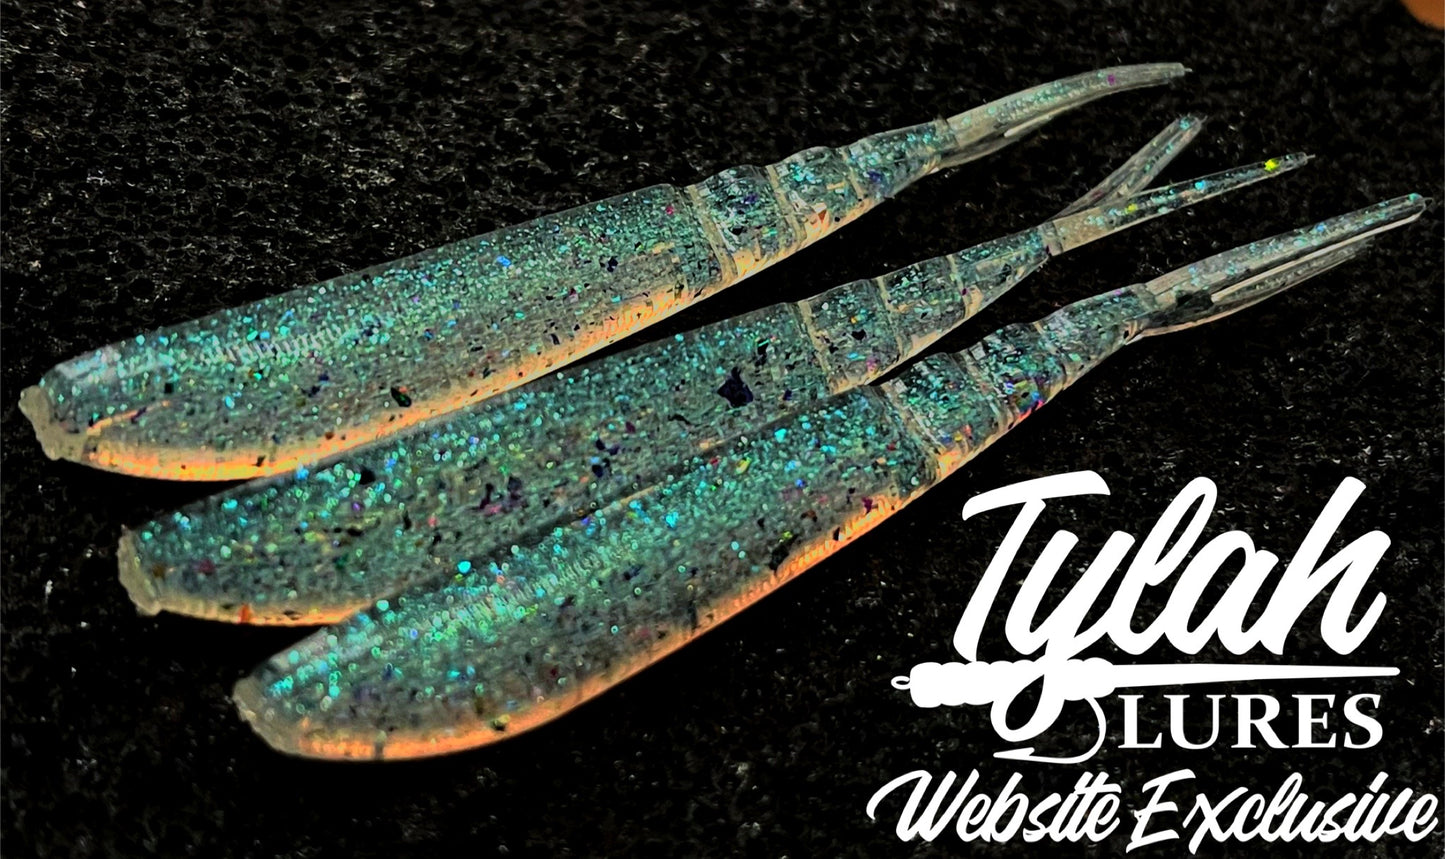 TylahLures Website Exclusive 3in Mini BaitFish